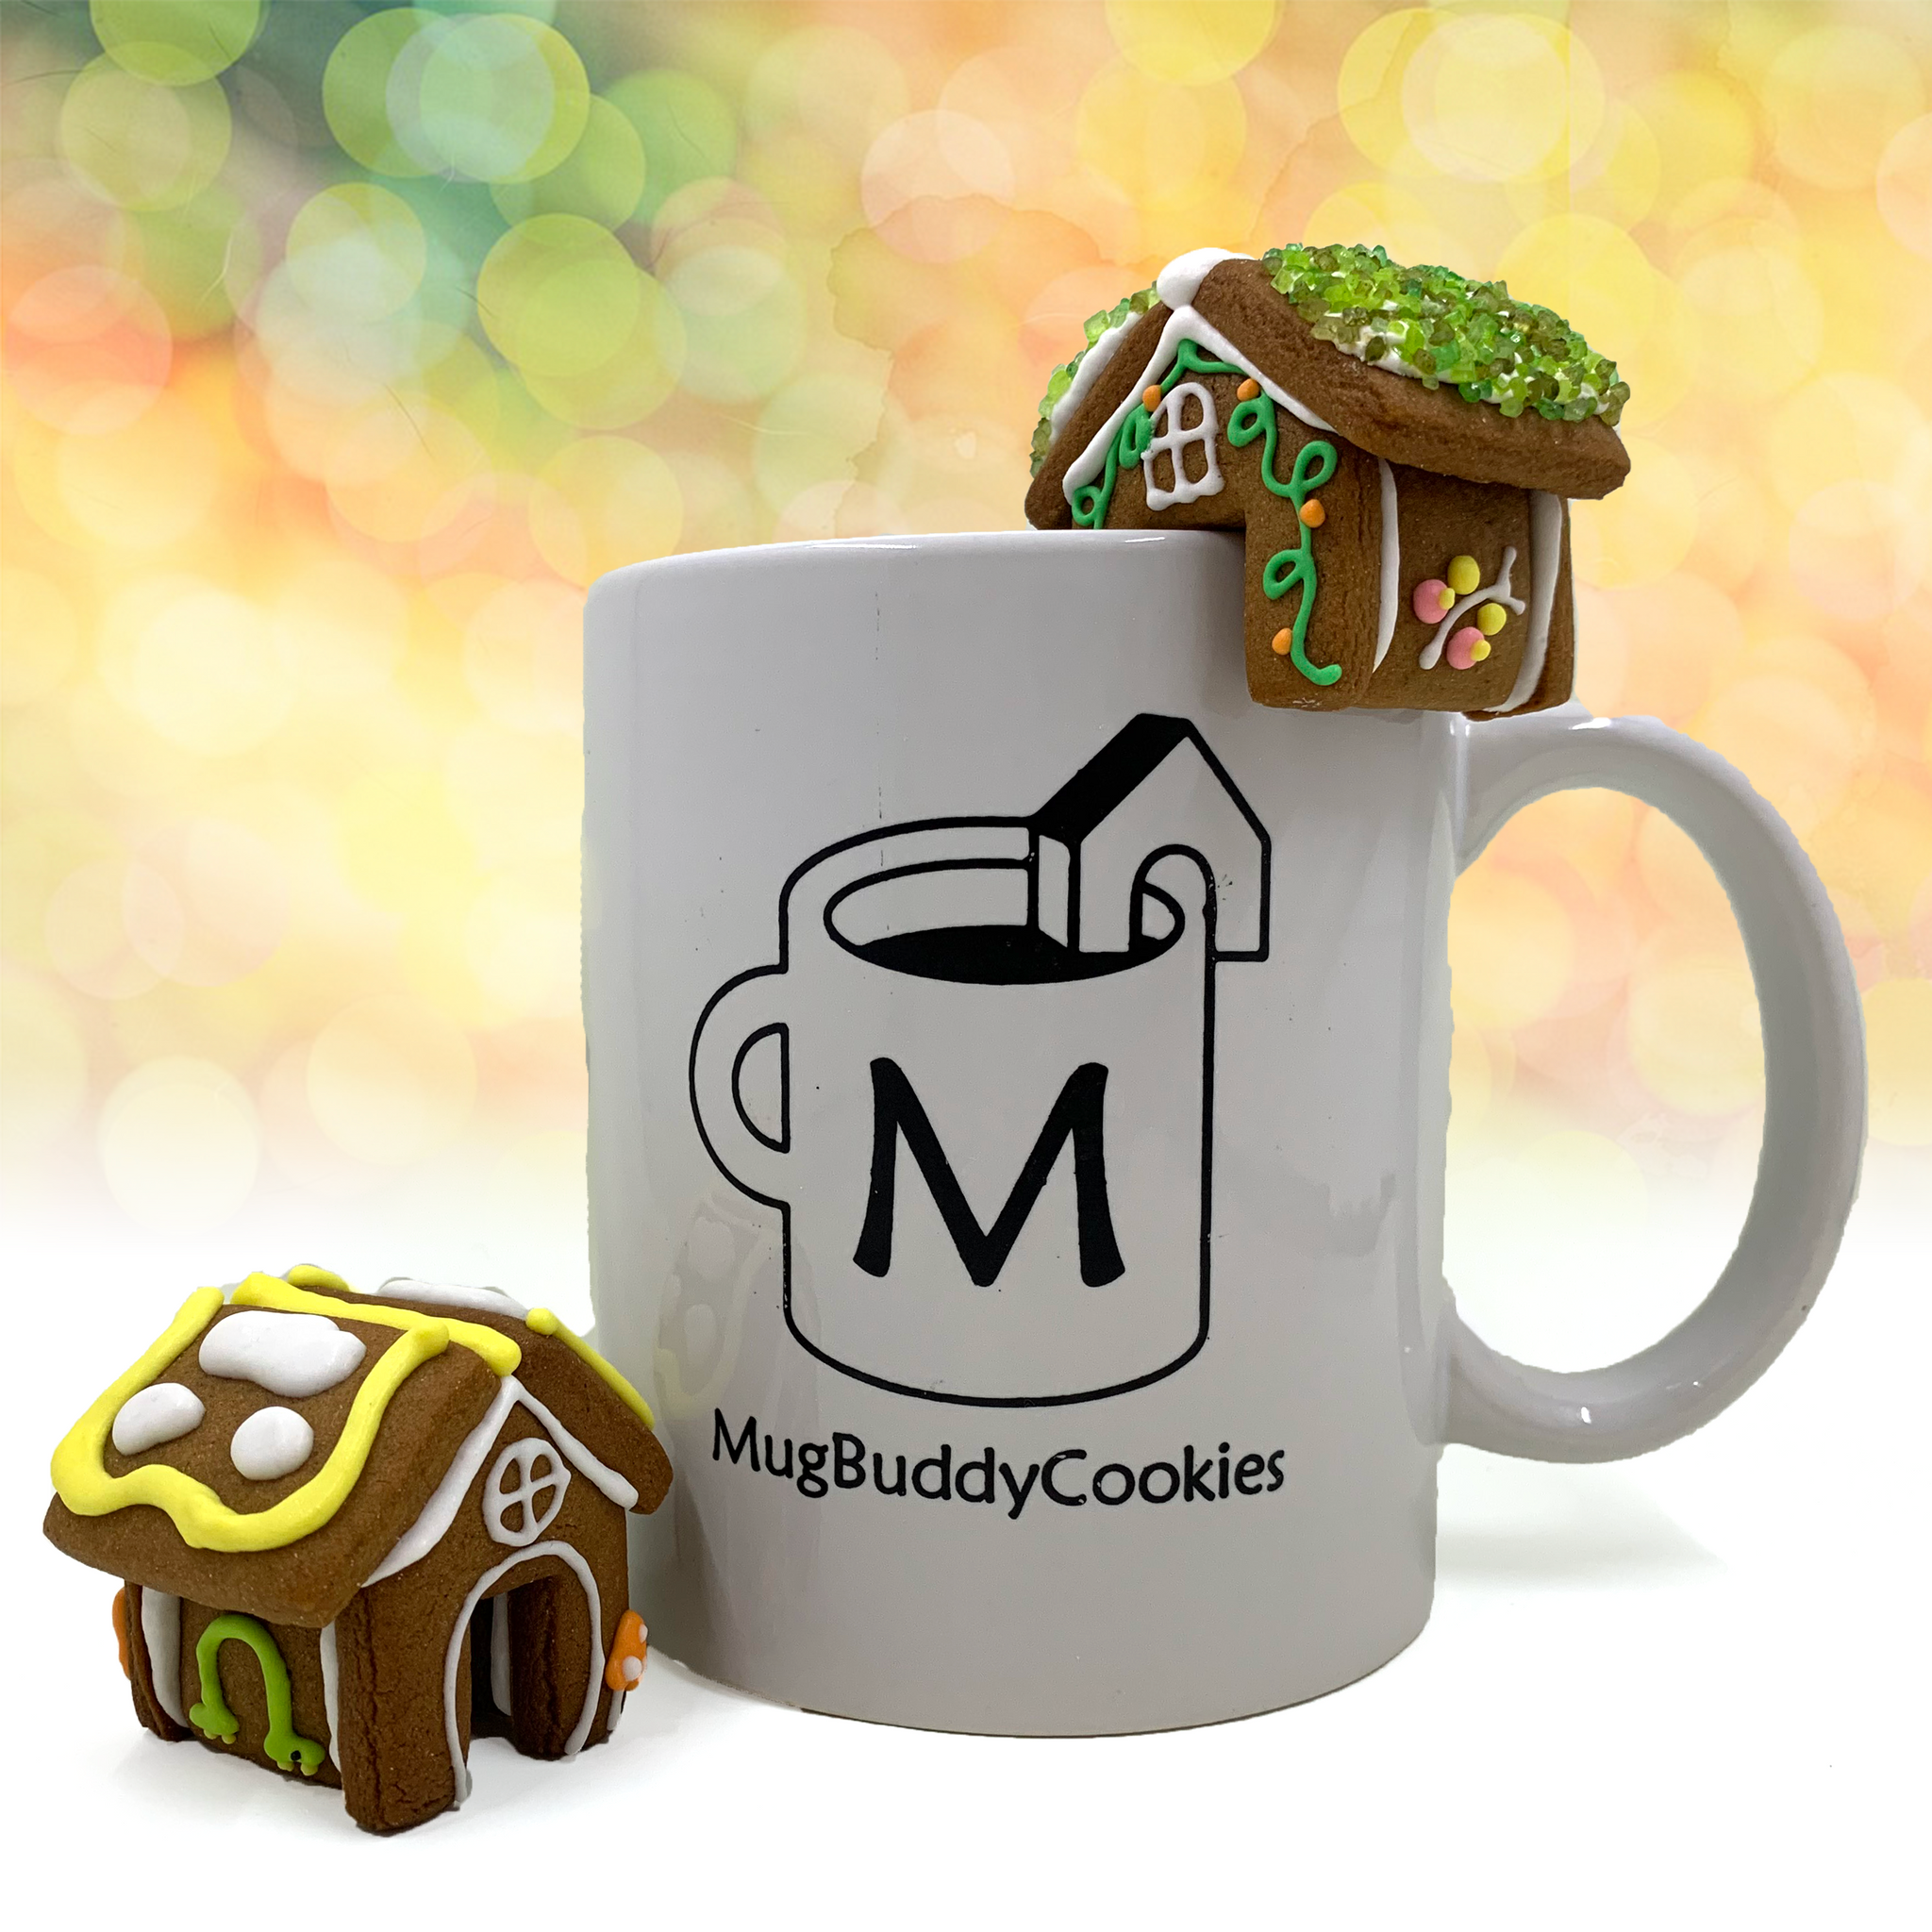 Mini Gingerbread House Mug Toppers - gluten free